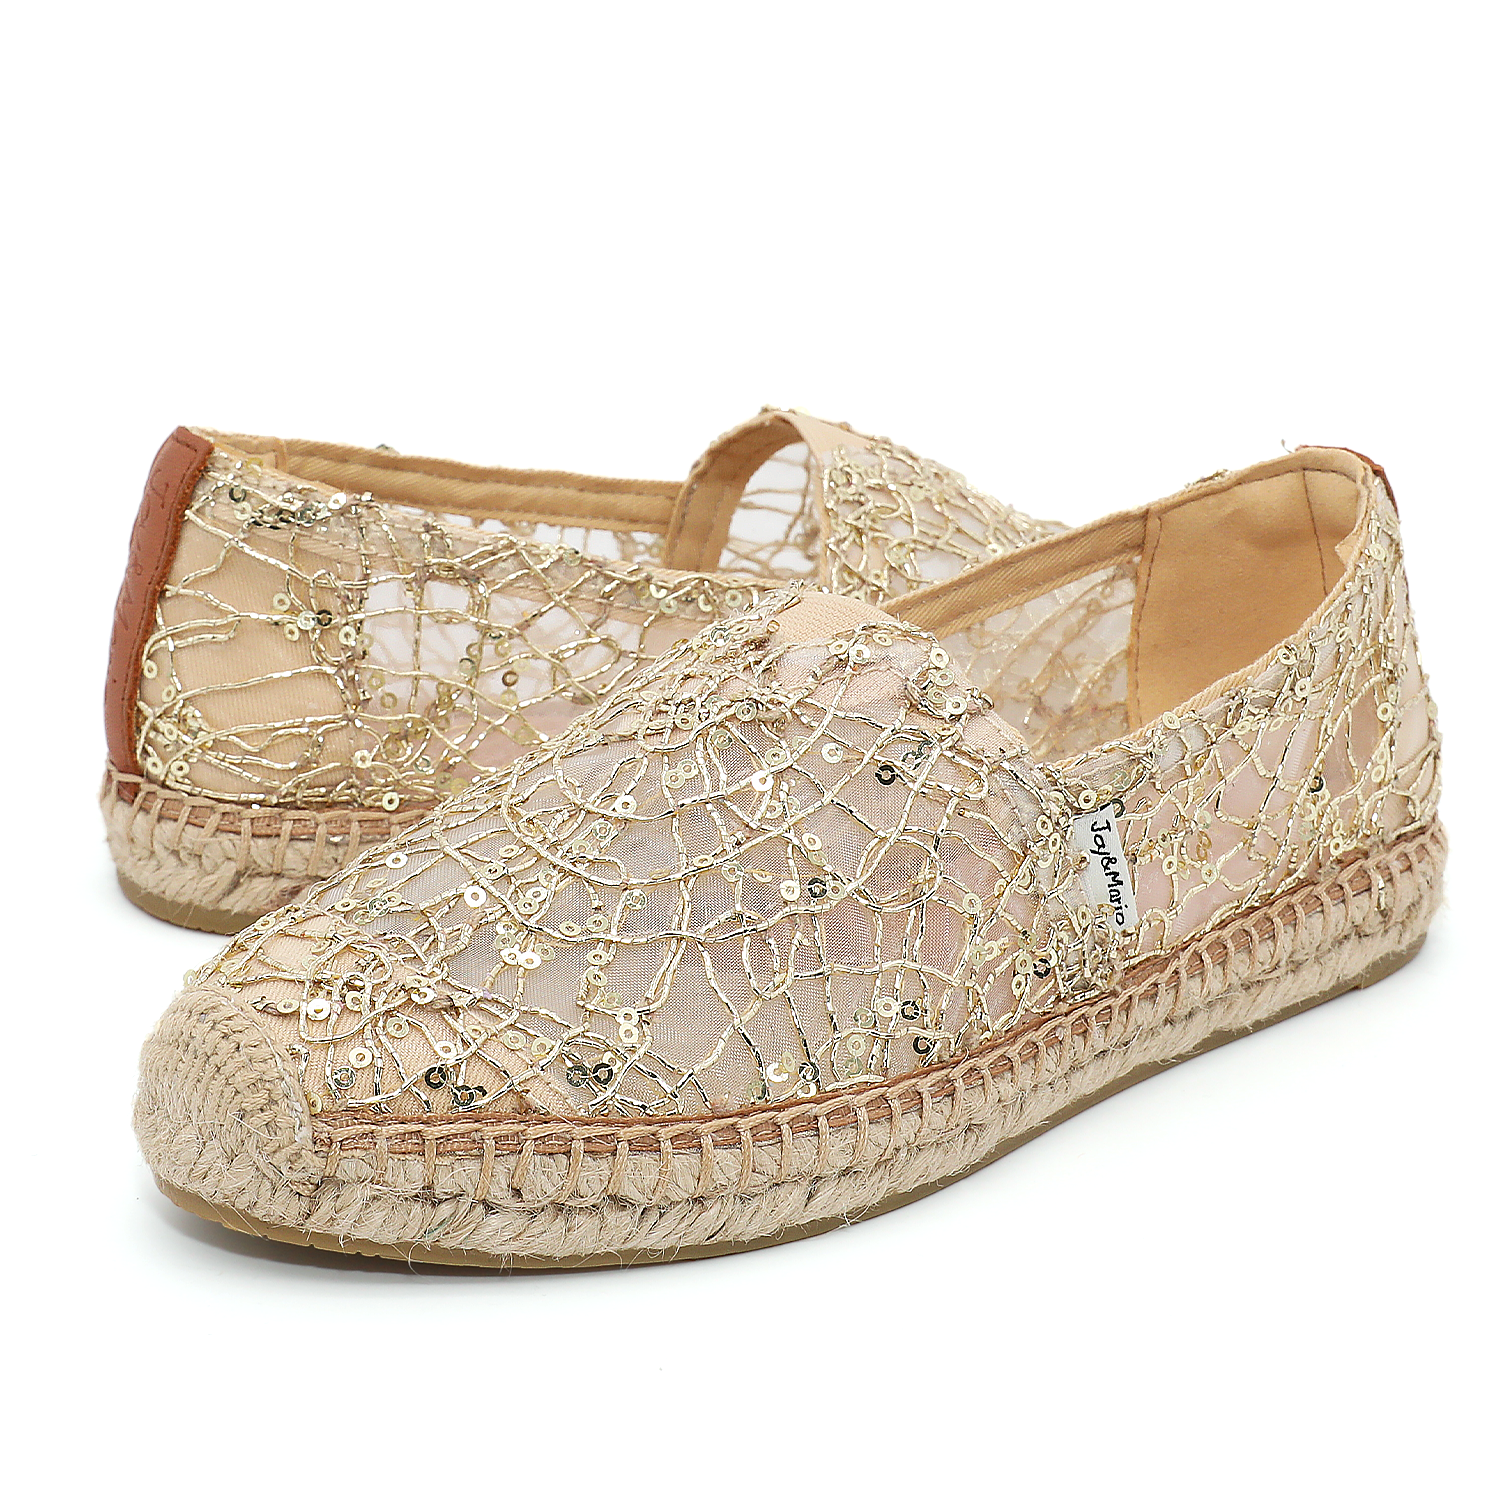 JOY&MARIO Handmade Women’s Slip-On Espadrille Mesh Loafers Flats in Gold-A01070W